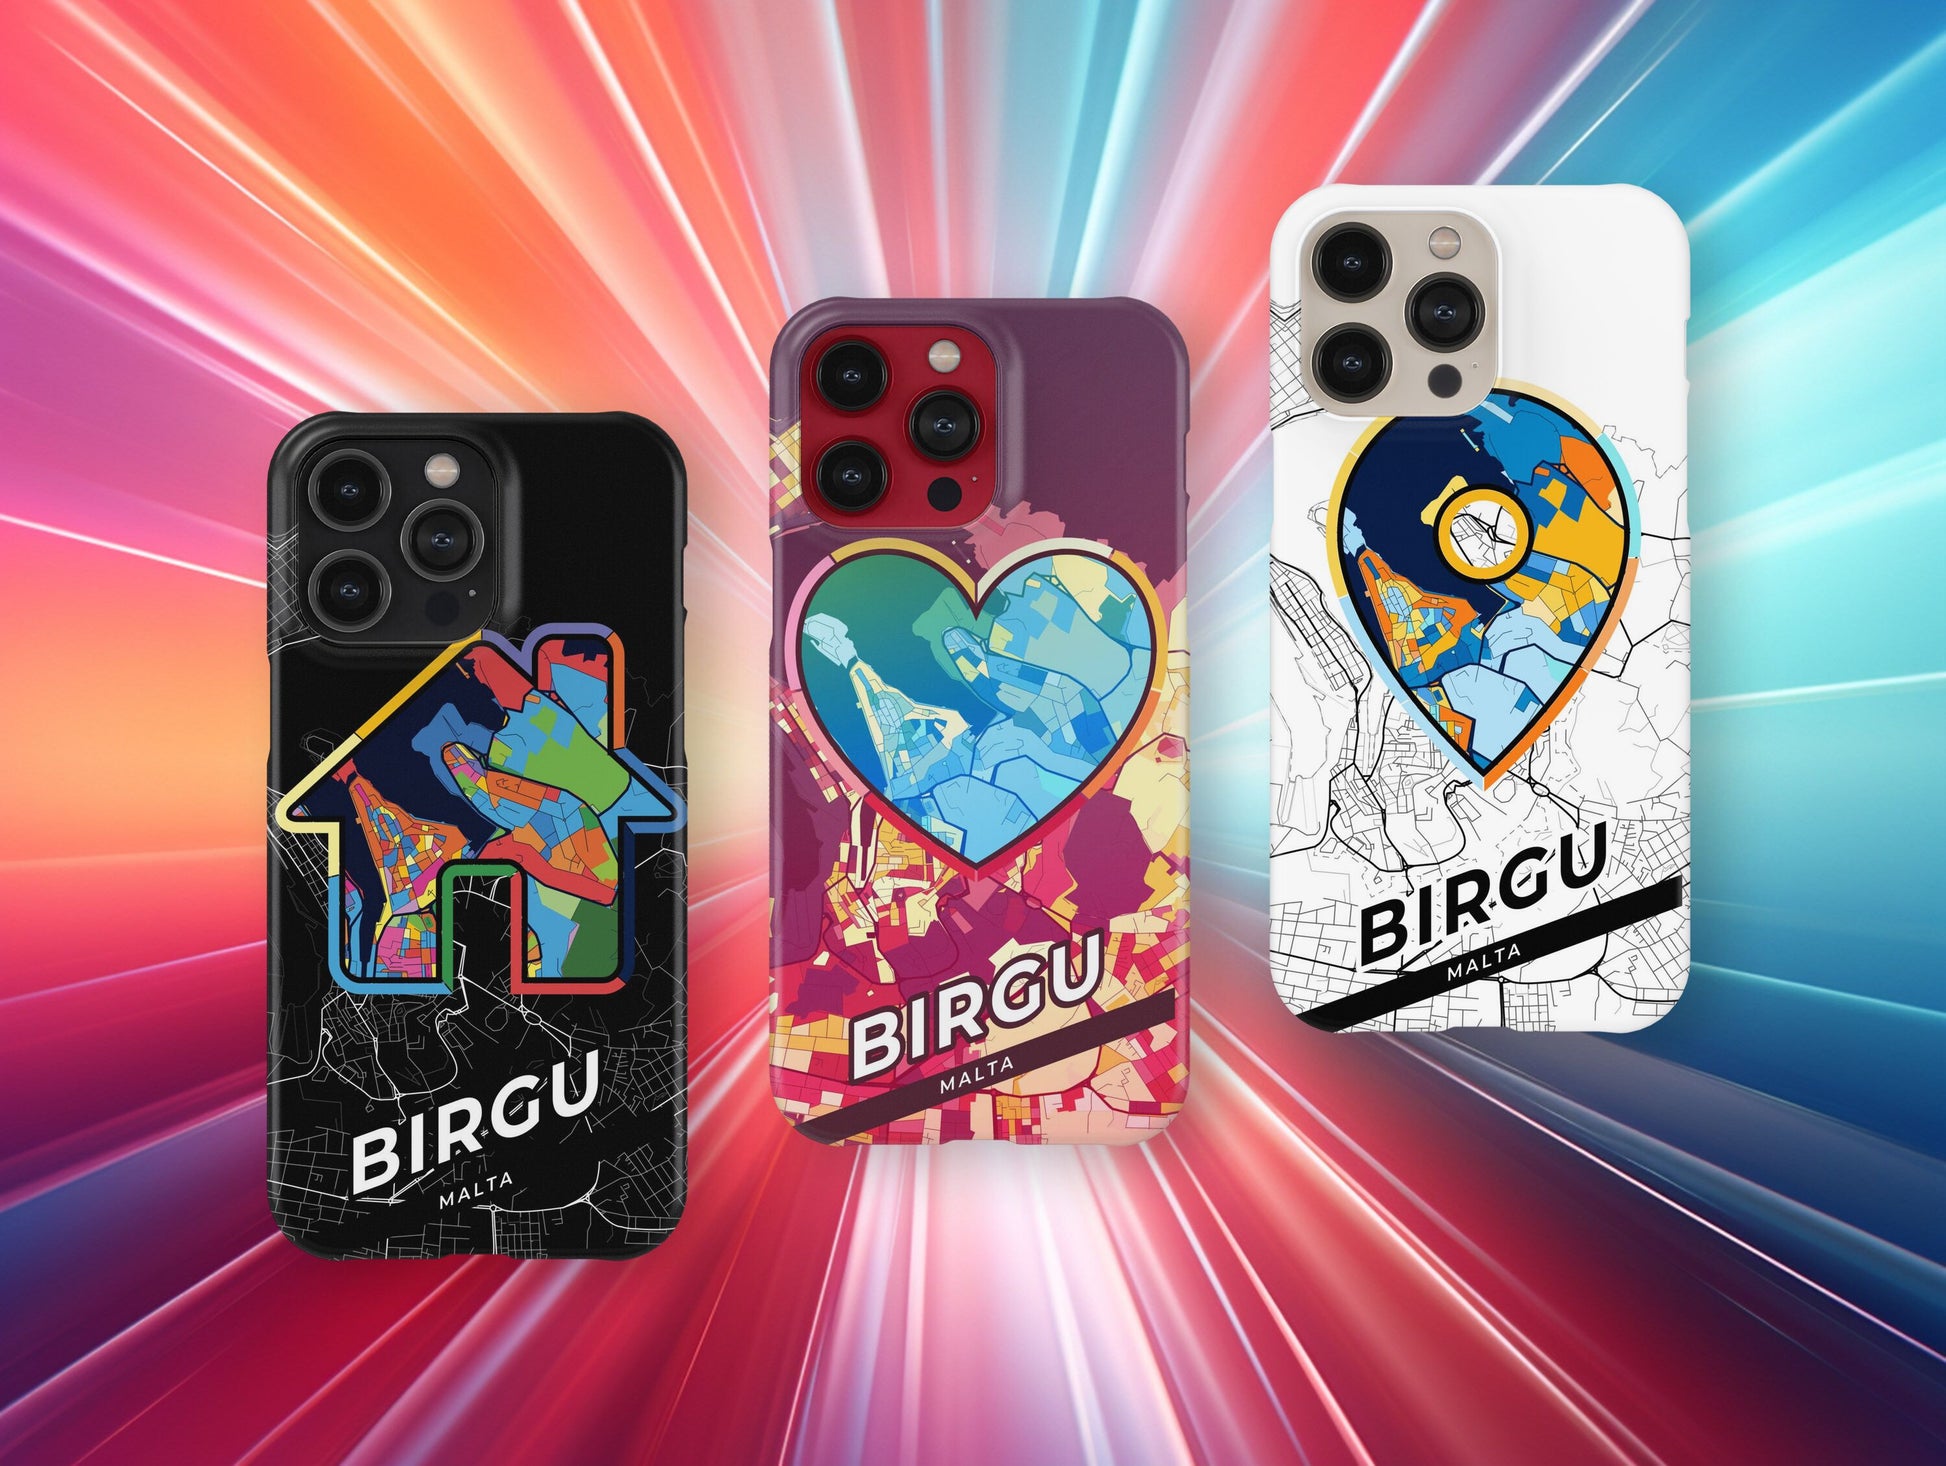 Birgu Malta slim phone case with colorful icon. Birthday, wedding or housewarming gift. Couple match cases.